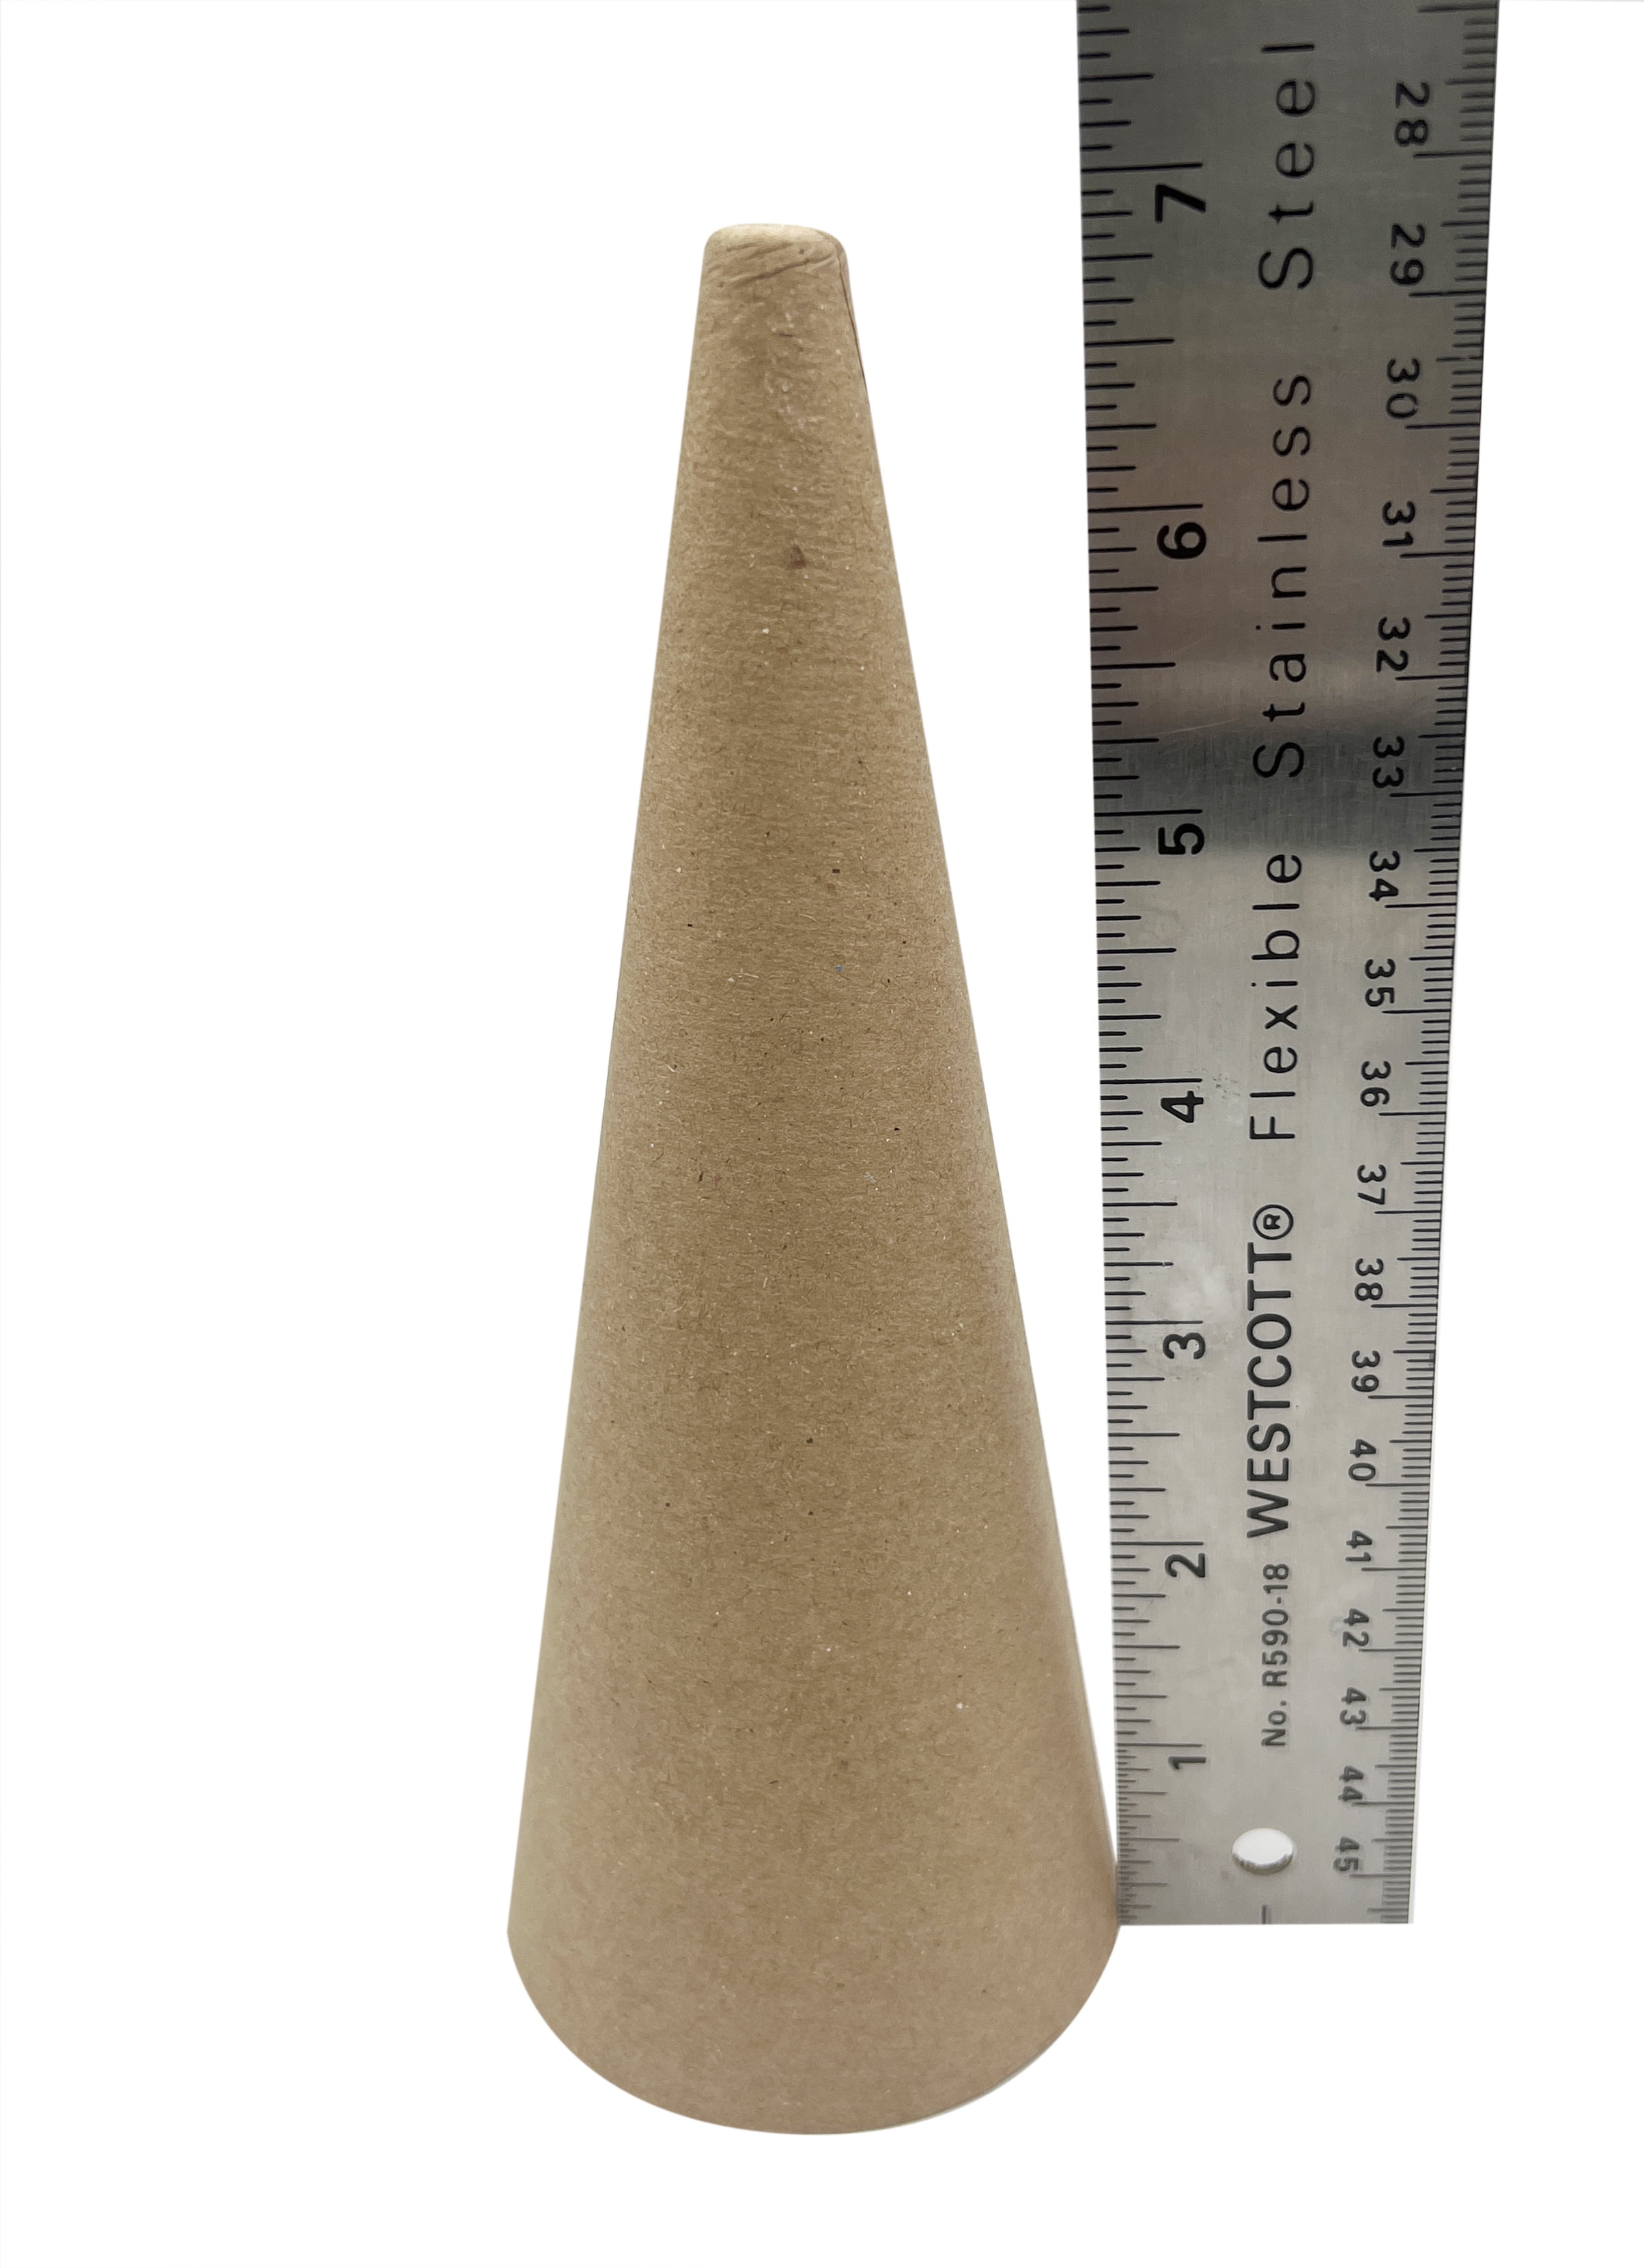 MILISTEN 60pcs Pieces Oval Wood Trim Cardboard Cones for Crafts